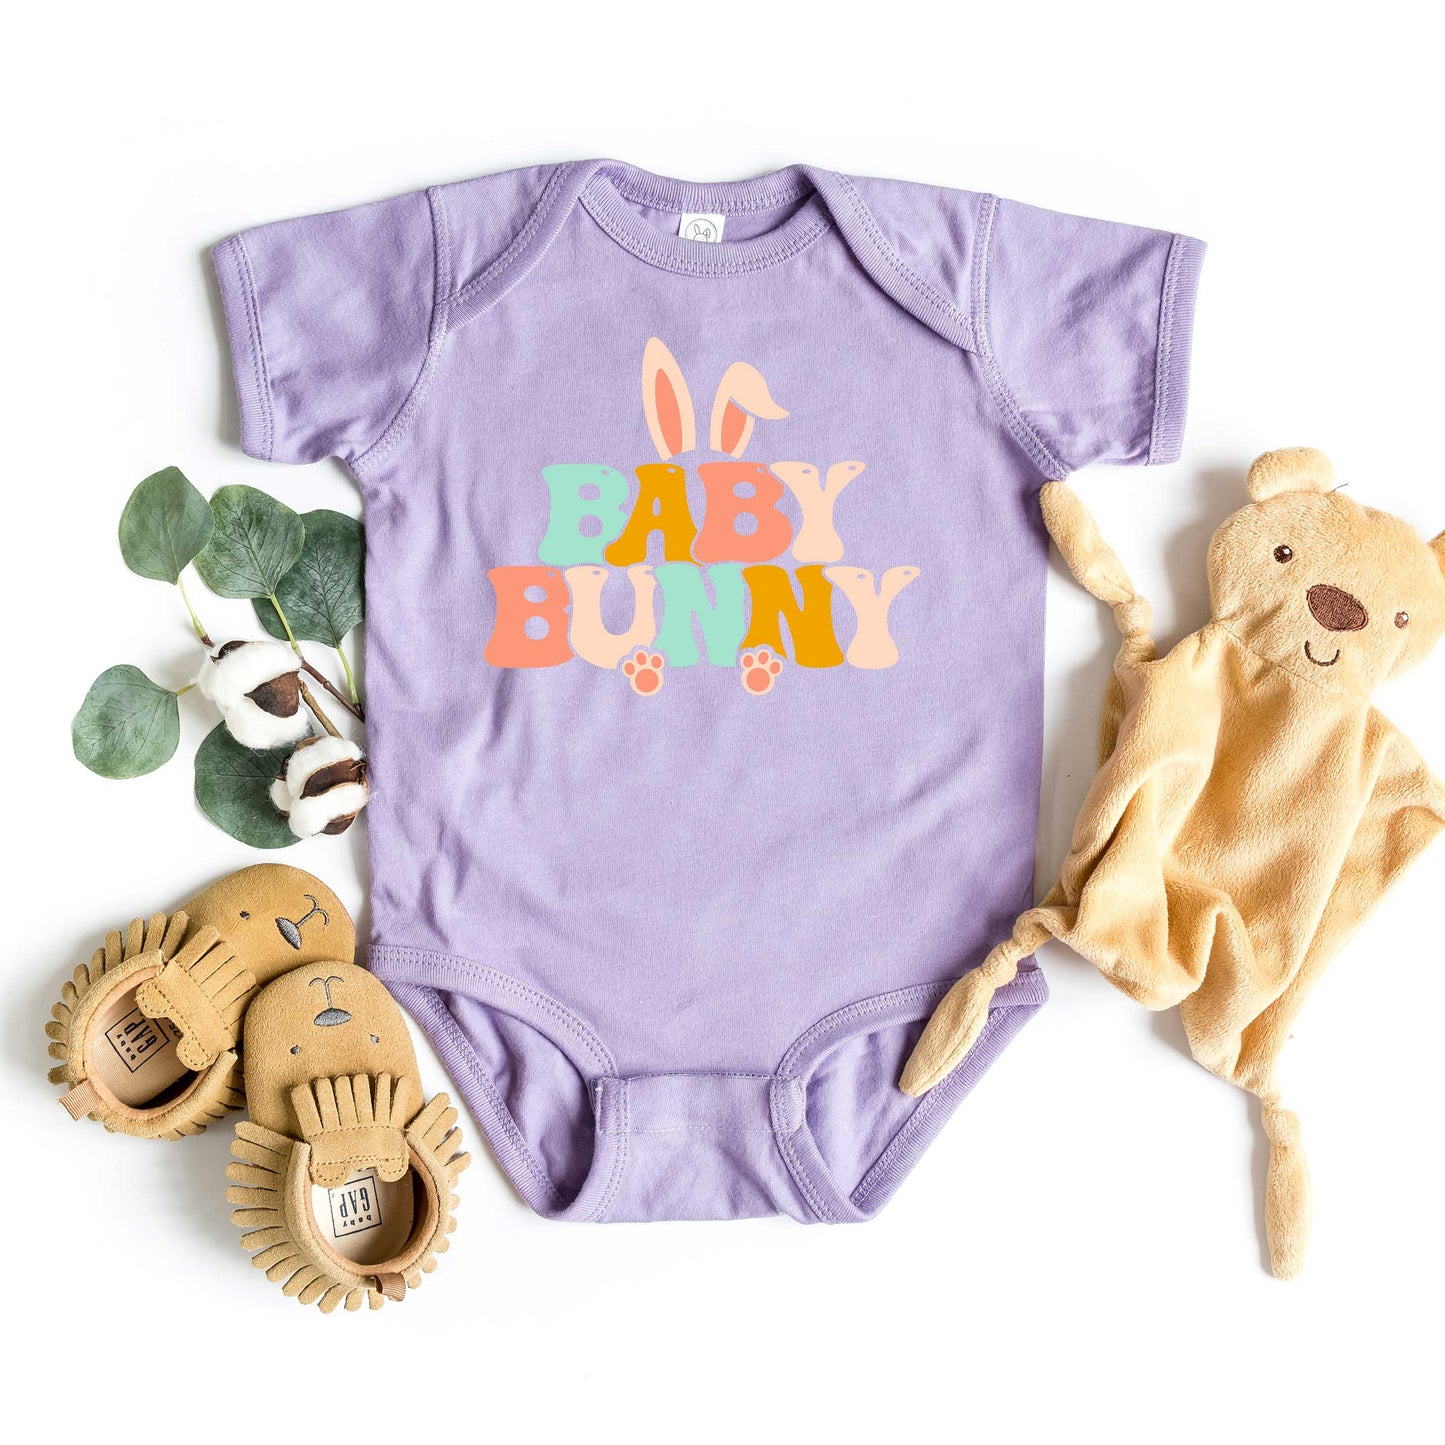 Baby Bunny Ears | Baby Graphic Short Sleeve Onesie